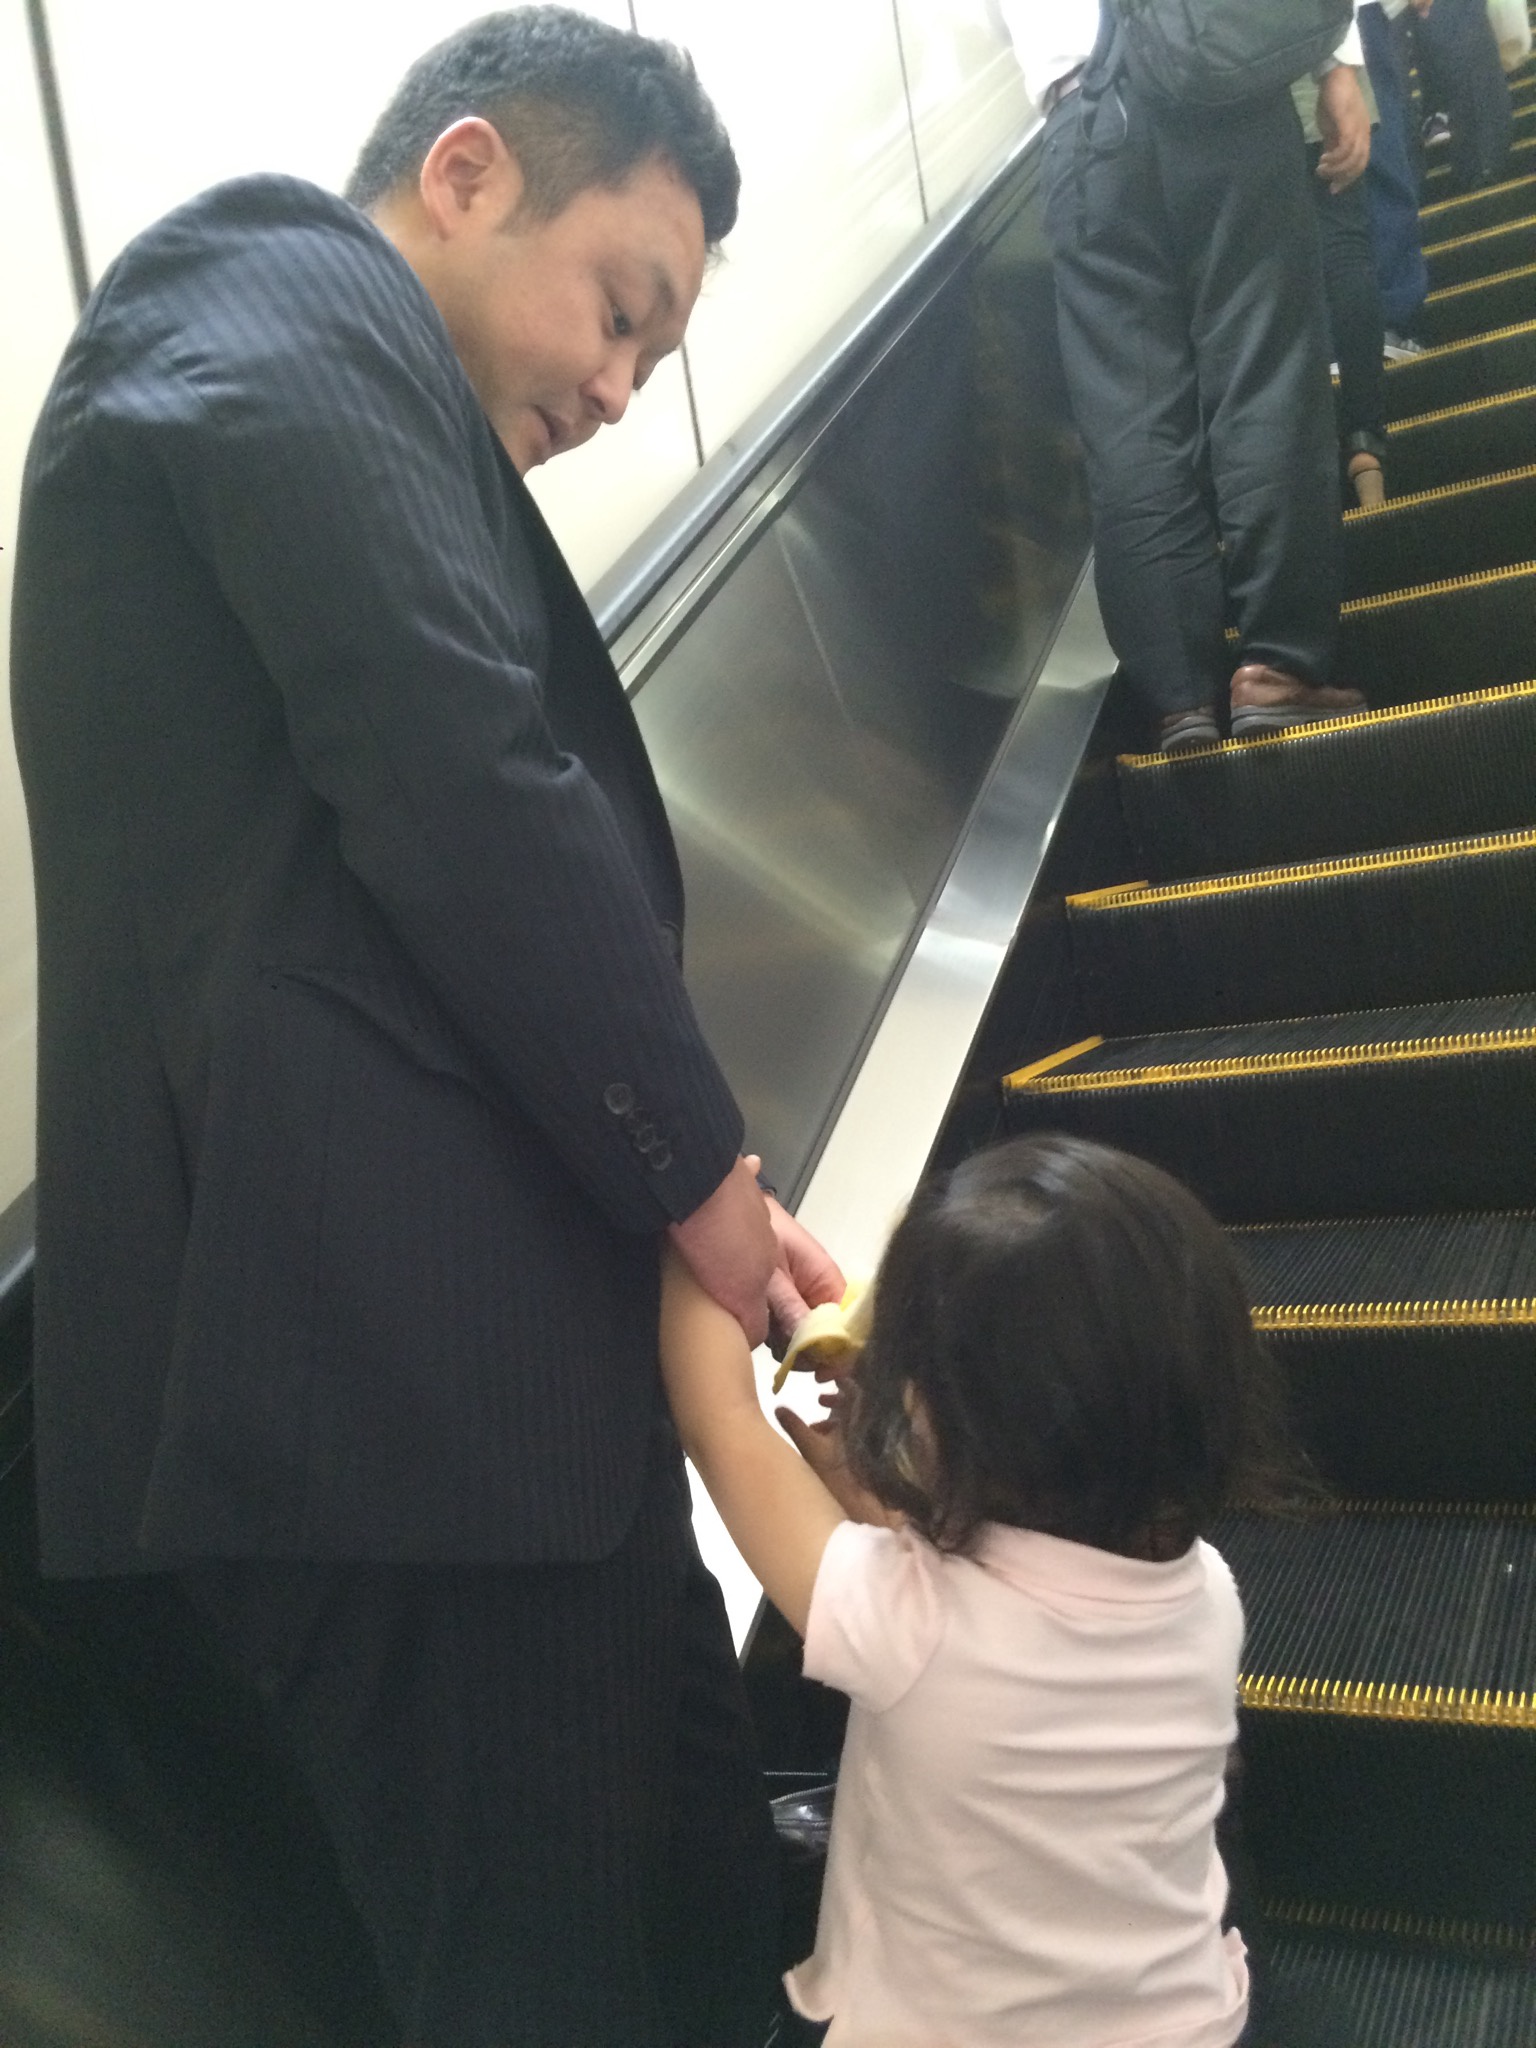 Yosuke rides an escalator with Kenichi's daughter